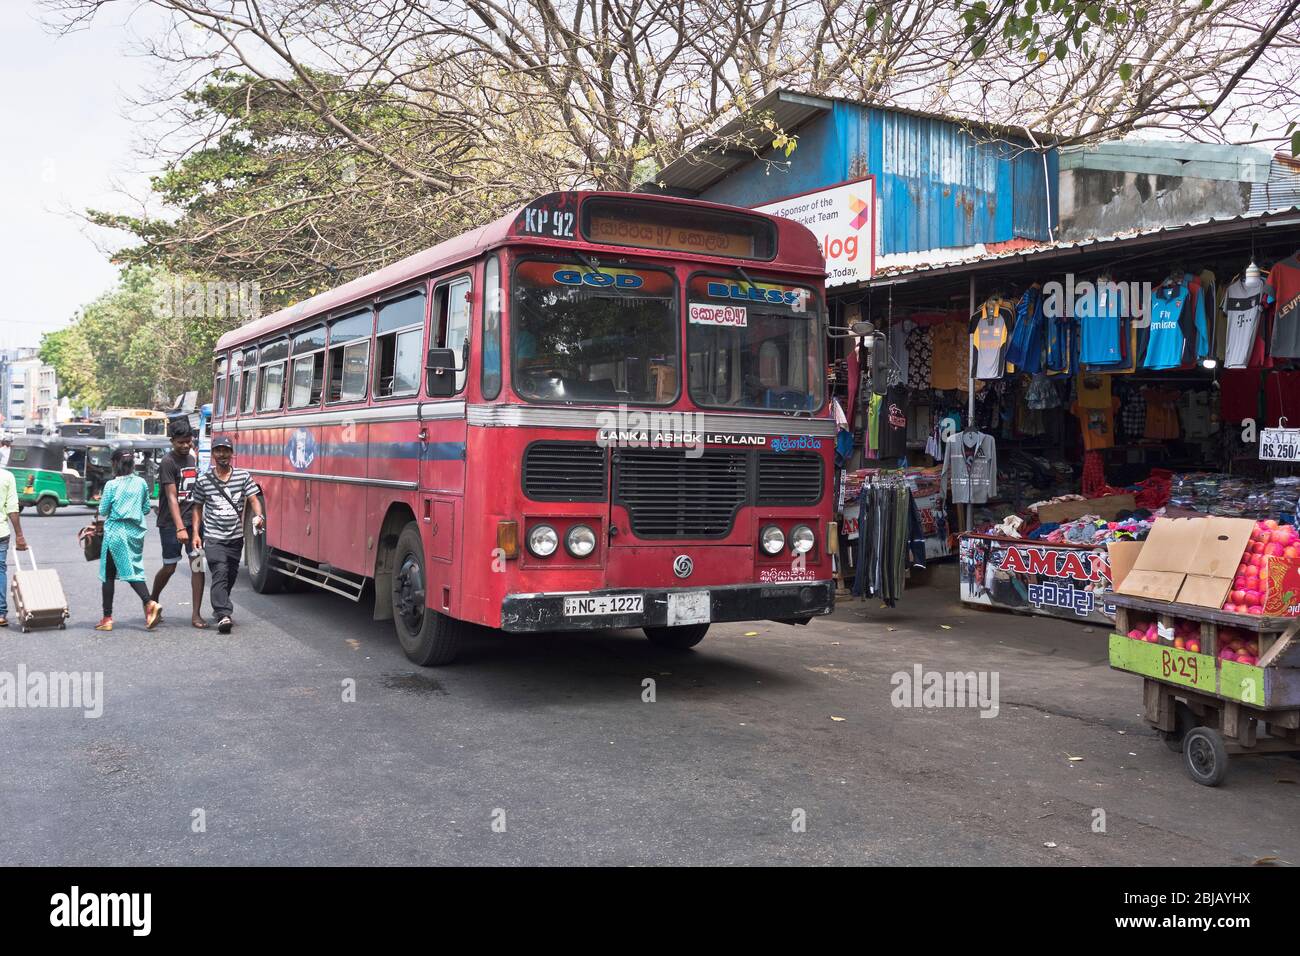 dh Lanka Ashok Leyland Bus COLOMBO MARKT SRI LANKA ASIEN Asiatischer Markt Öffentliche Verkehrsmittel Bord Rote Busse Single Decker lokalen Reisen Stockfoto